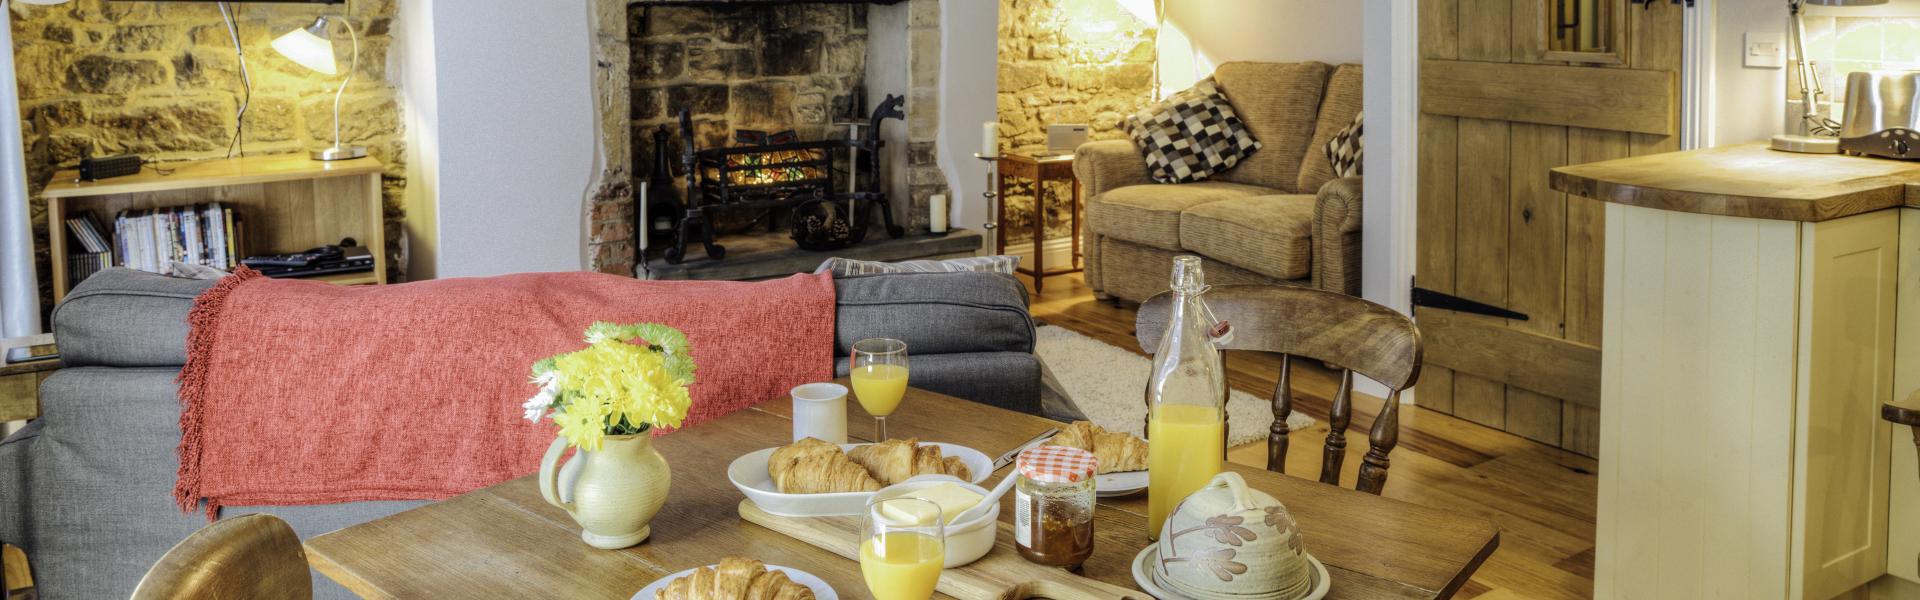 Bed and Breakfast Accommodation in Devon - HomeToGo